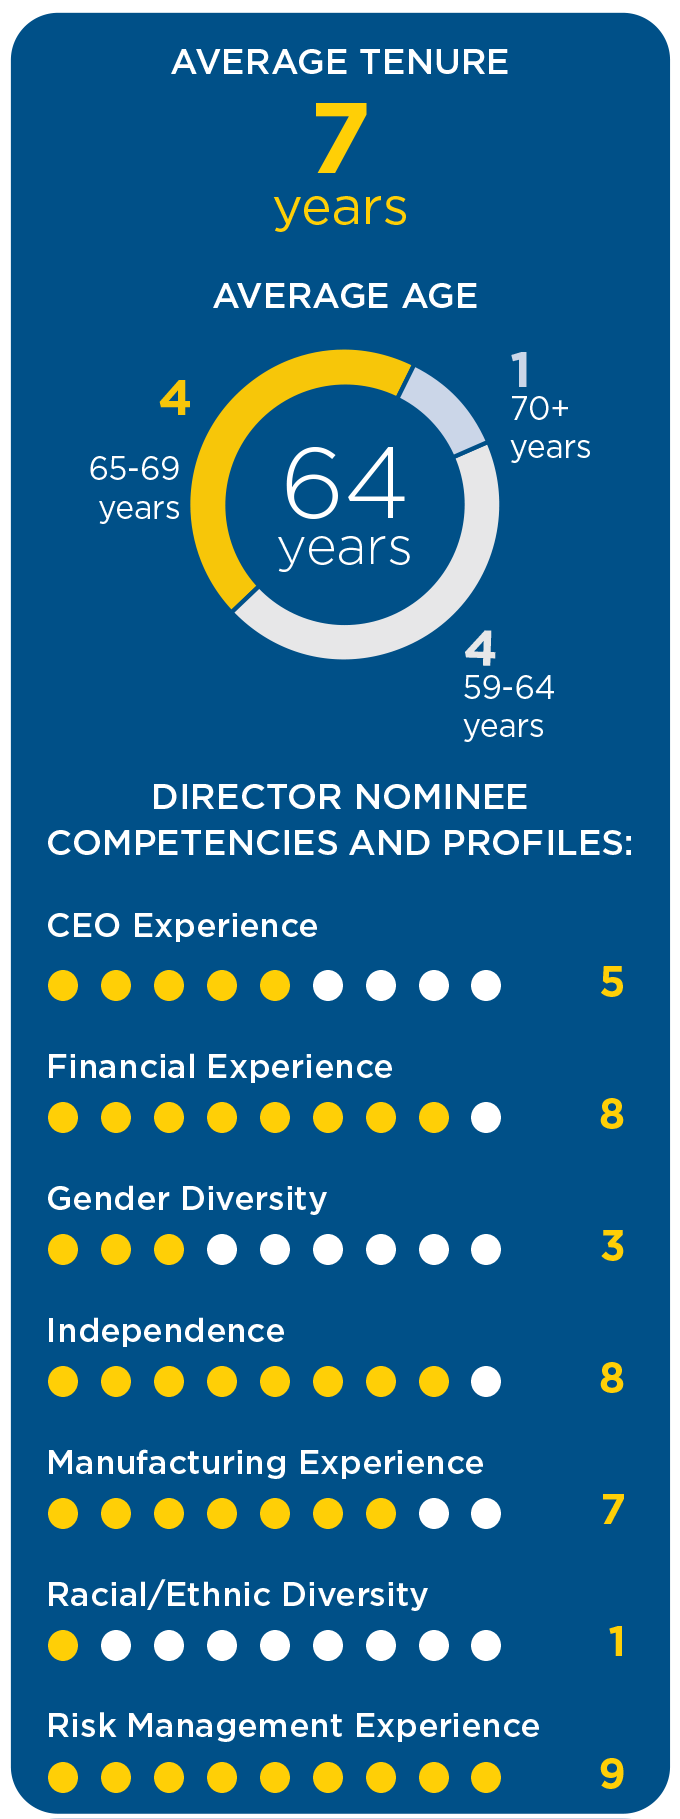 Director Nominee Competencies and Profiles